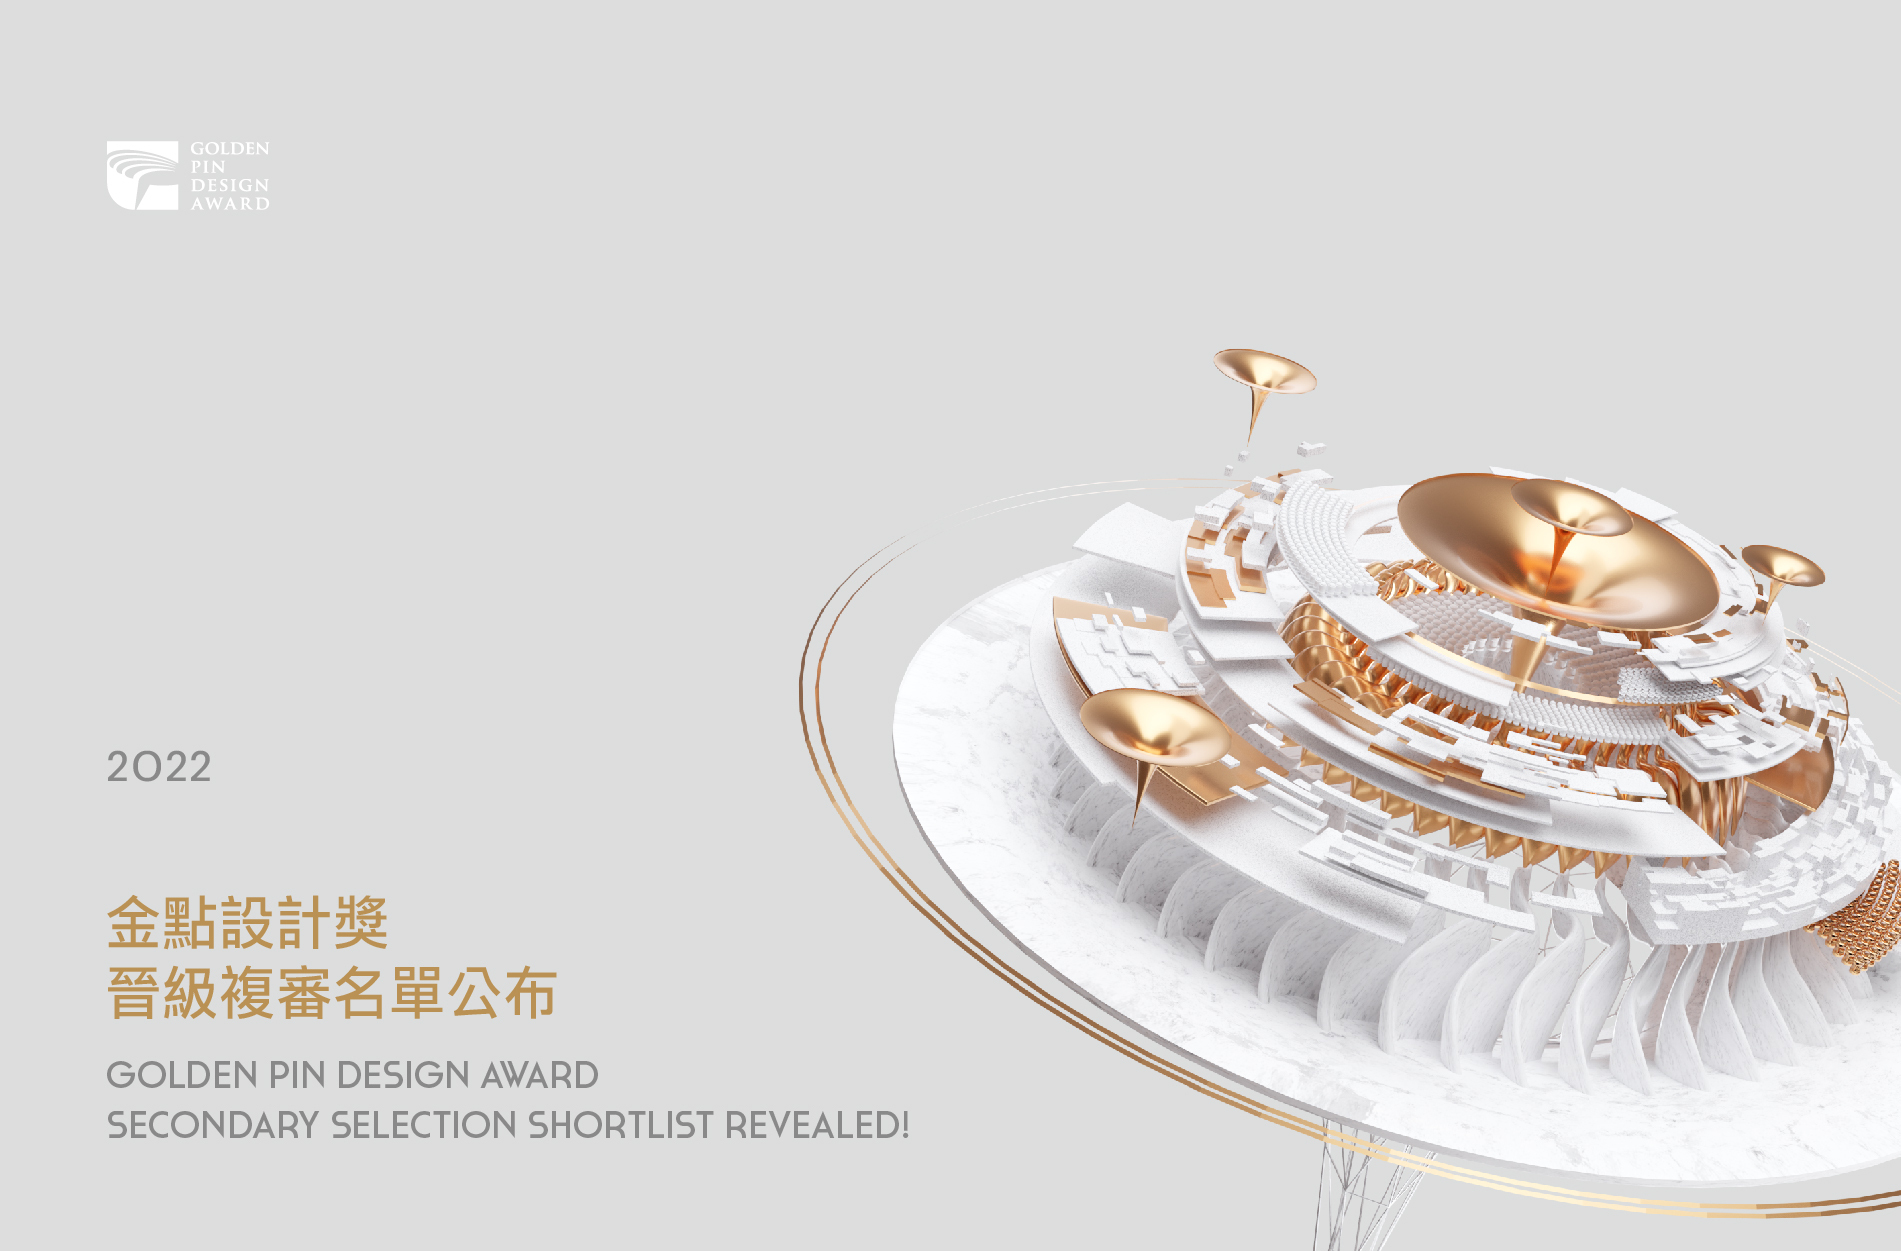 Golden Pin Design Award 2022 Preliminary Selection Wraps Up! Shortlist of Successful Entrants Announced